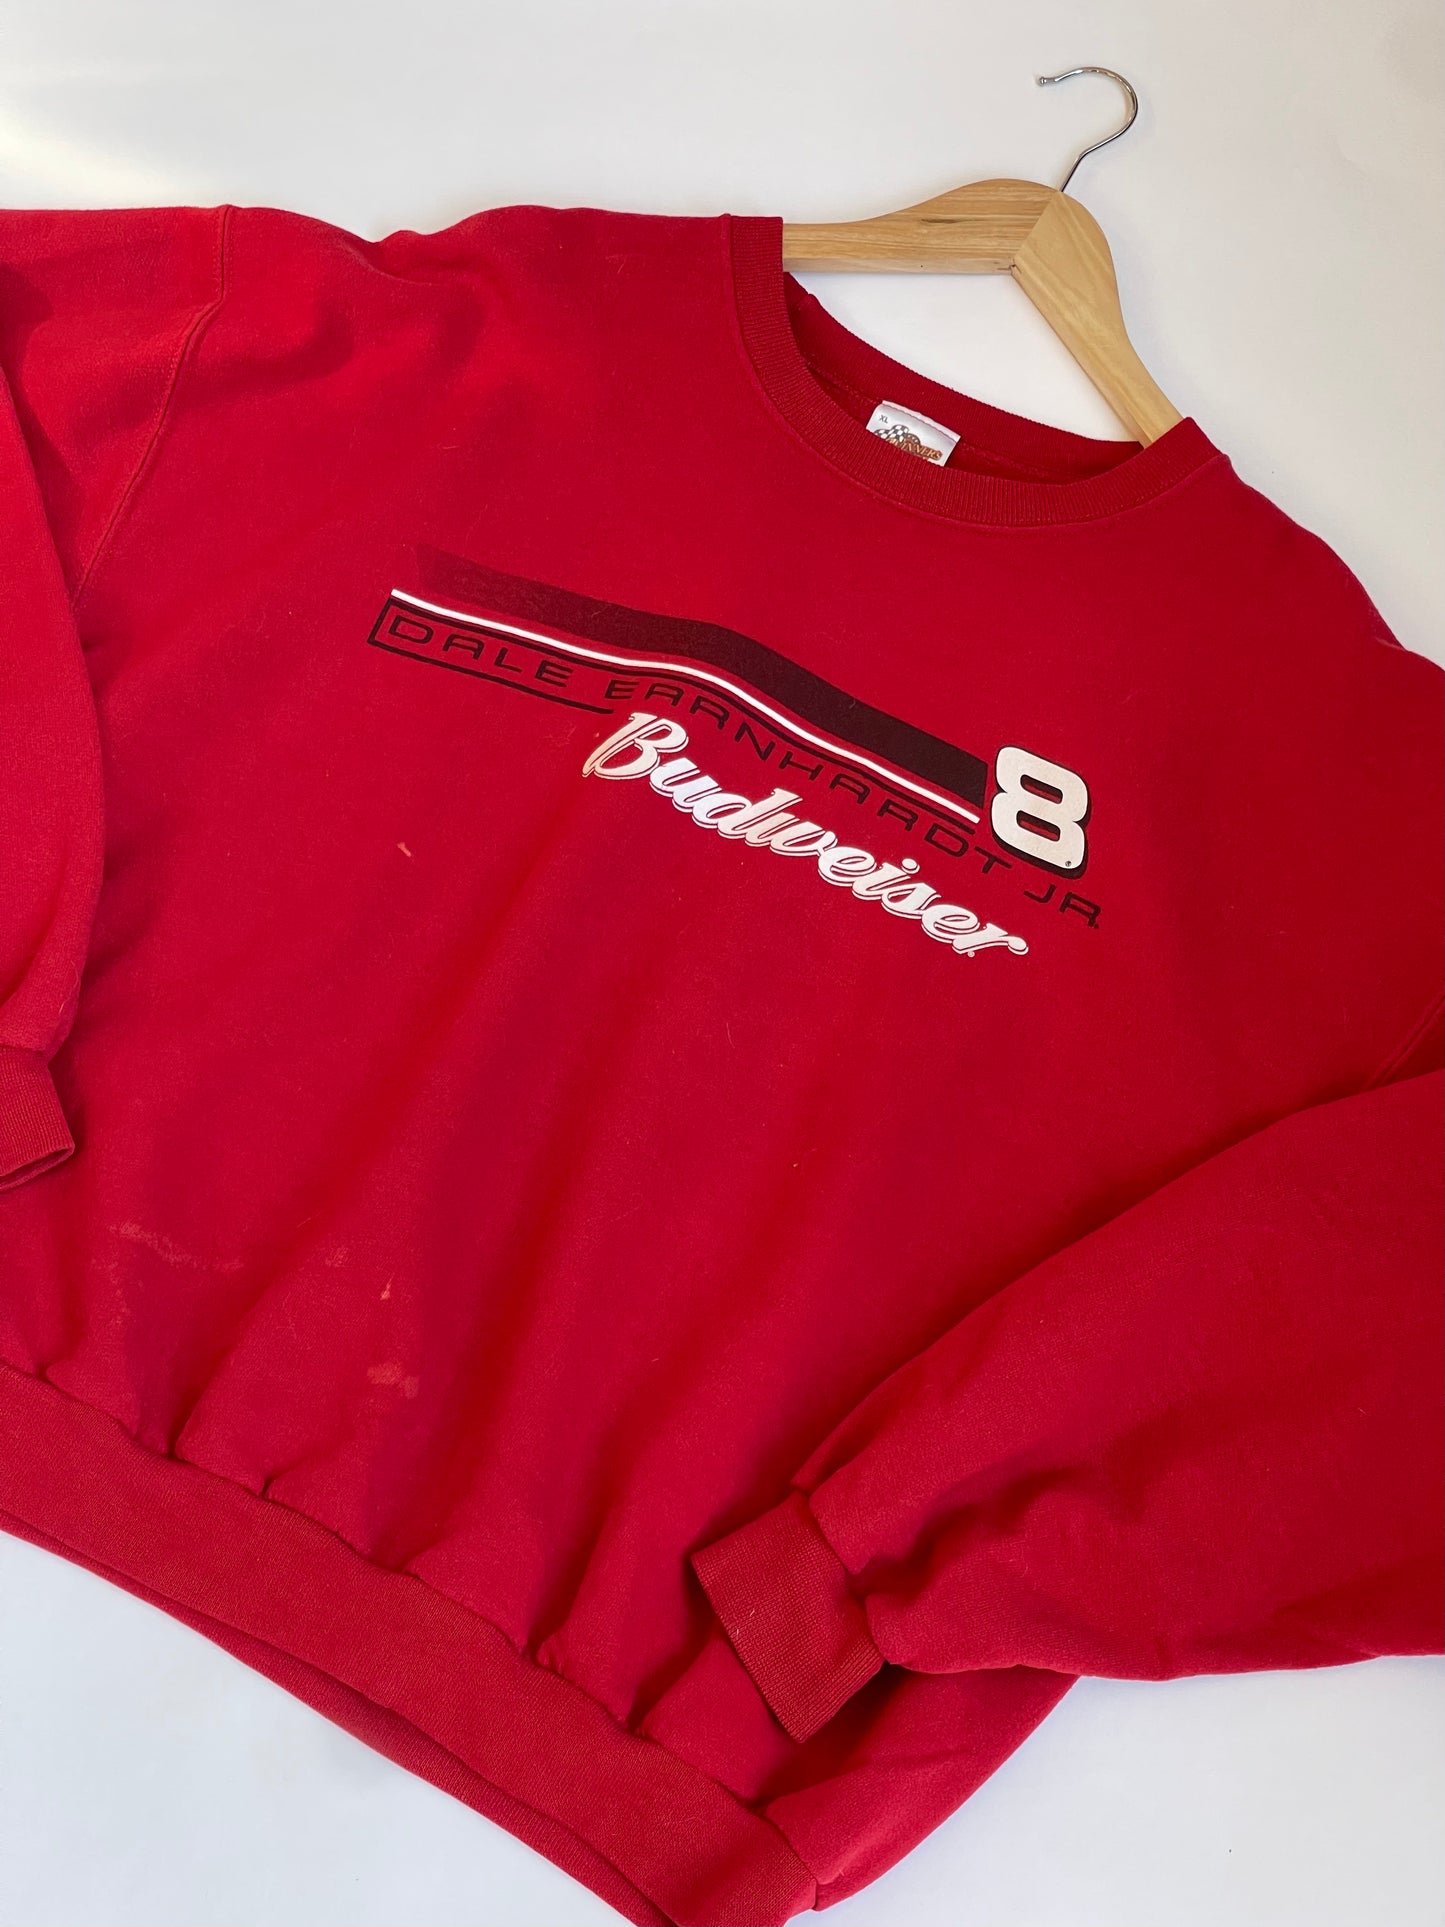 Vintage Dale Earnhardt Jr Budweiser Sweatshirt - XL